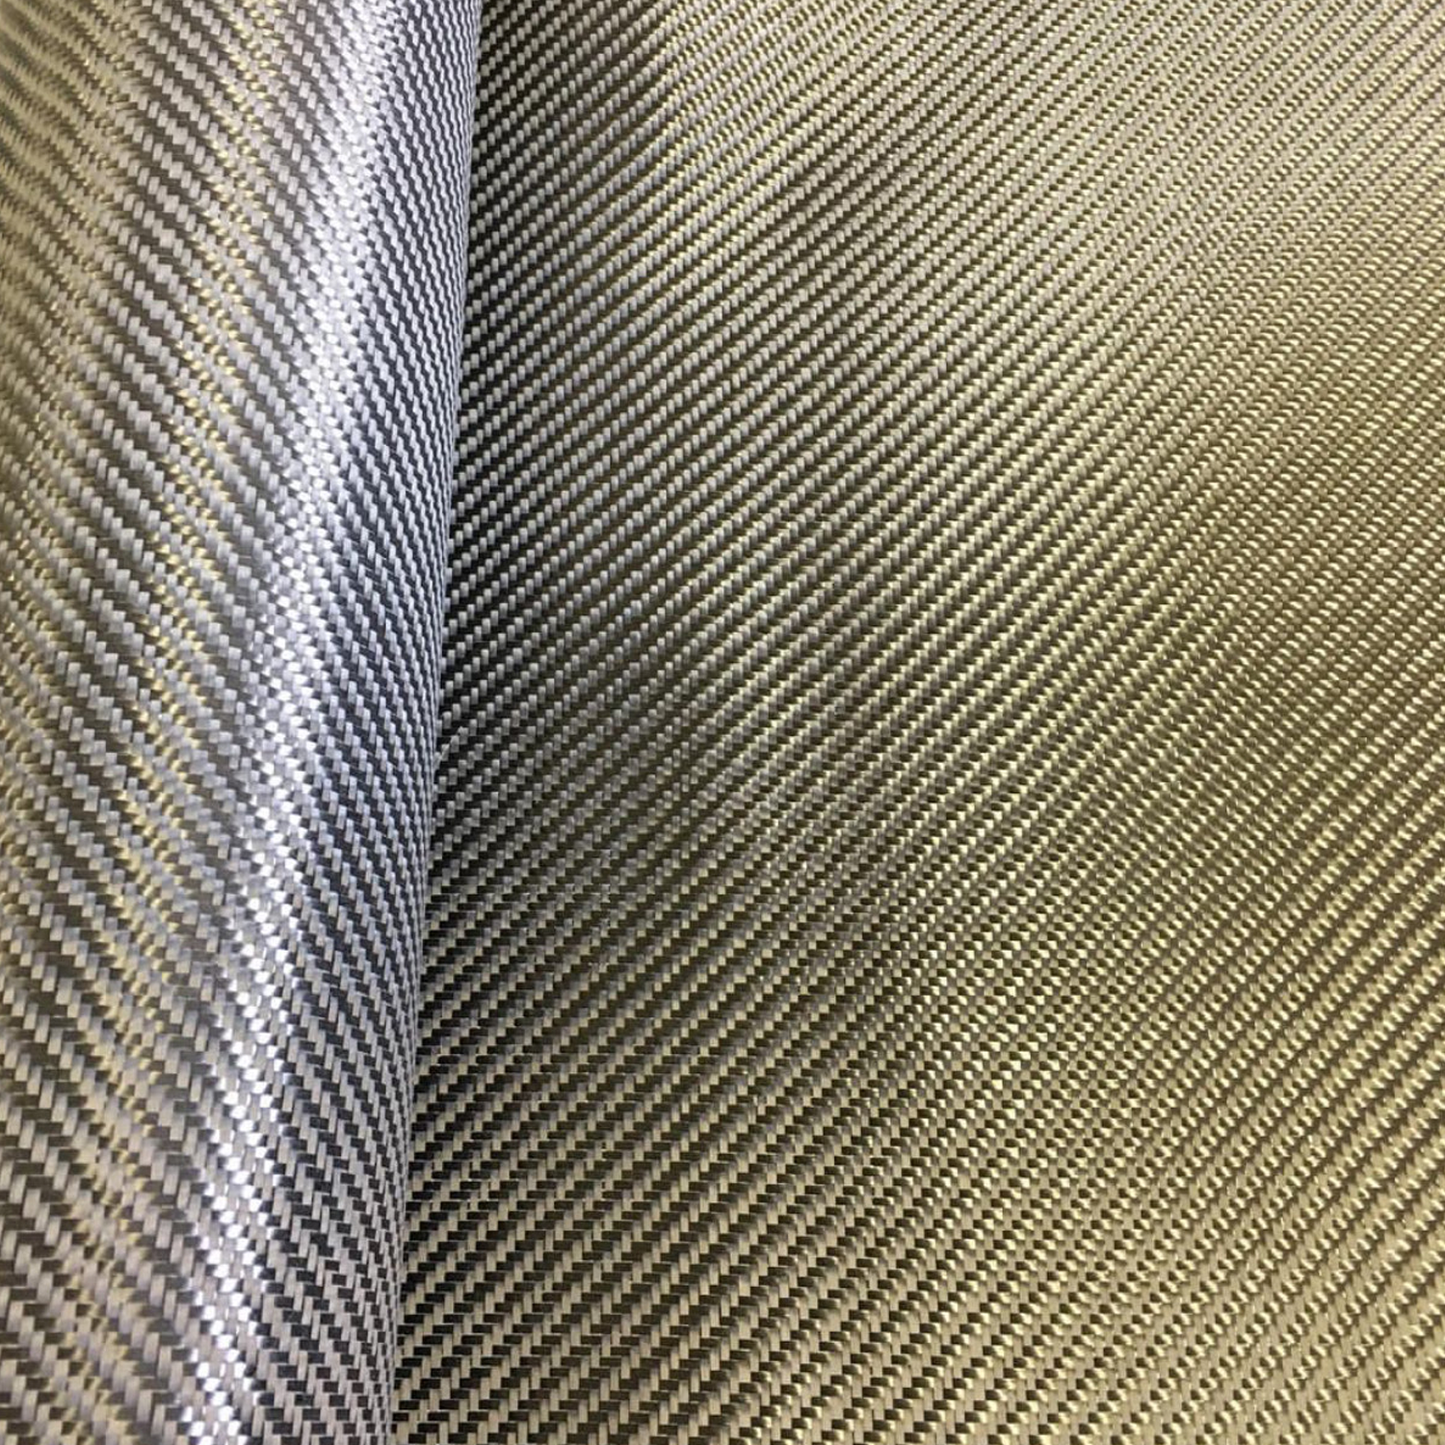 High quality 3K Twill Carbon Fiber Cloth Fabric 2x2 Twill 200g / Sqm Width 100cm